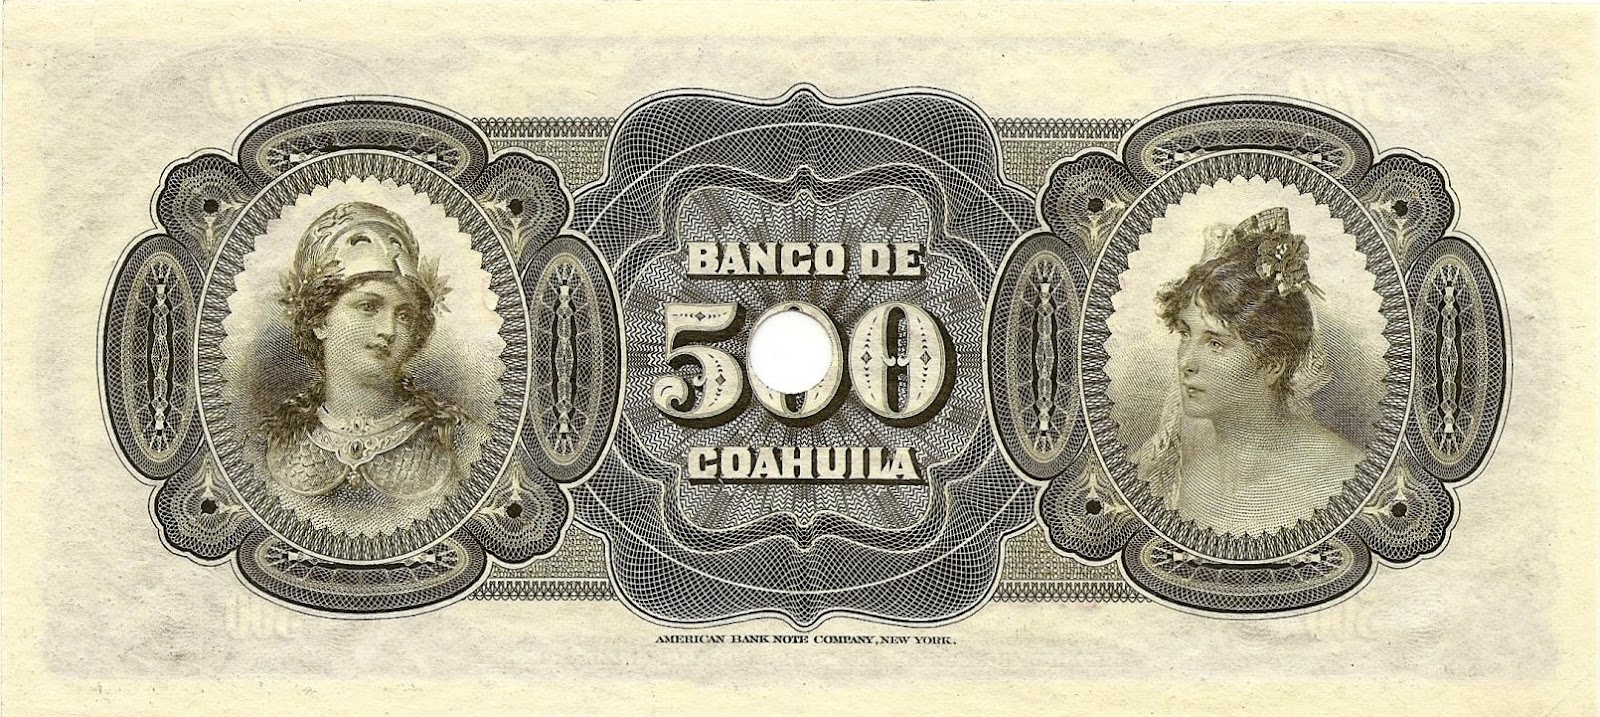 T me blank banknotes. 500 Купюра Мехико. Старые купюры Мексики. Мексиканский песо 1898. Номинал мексиканских песо.